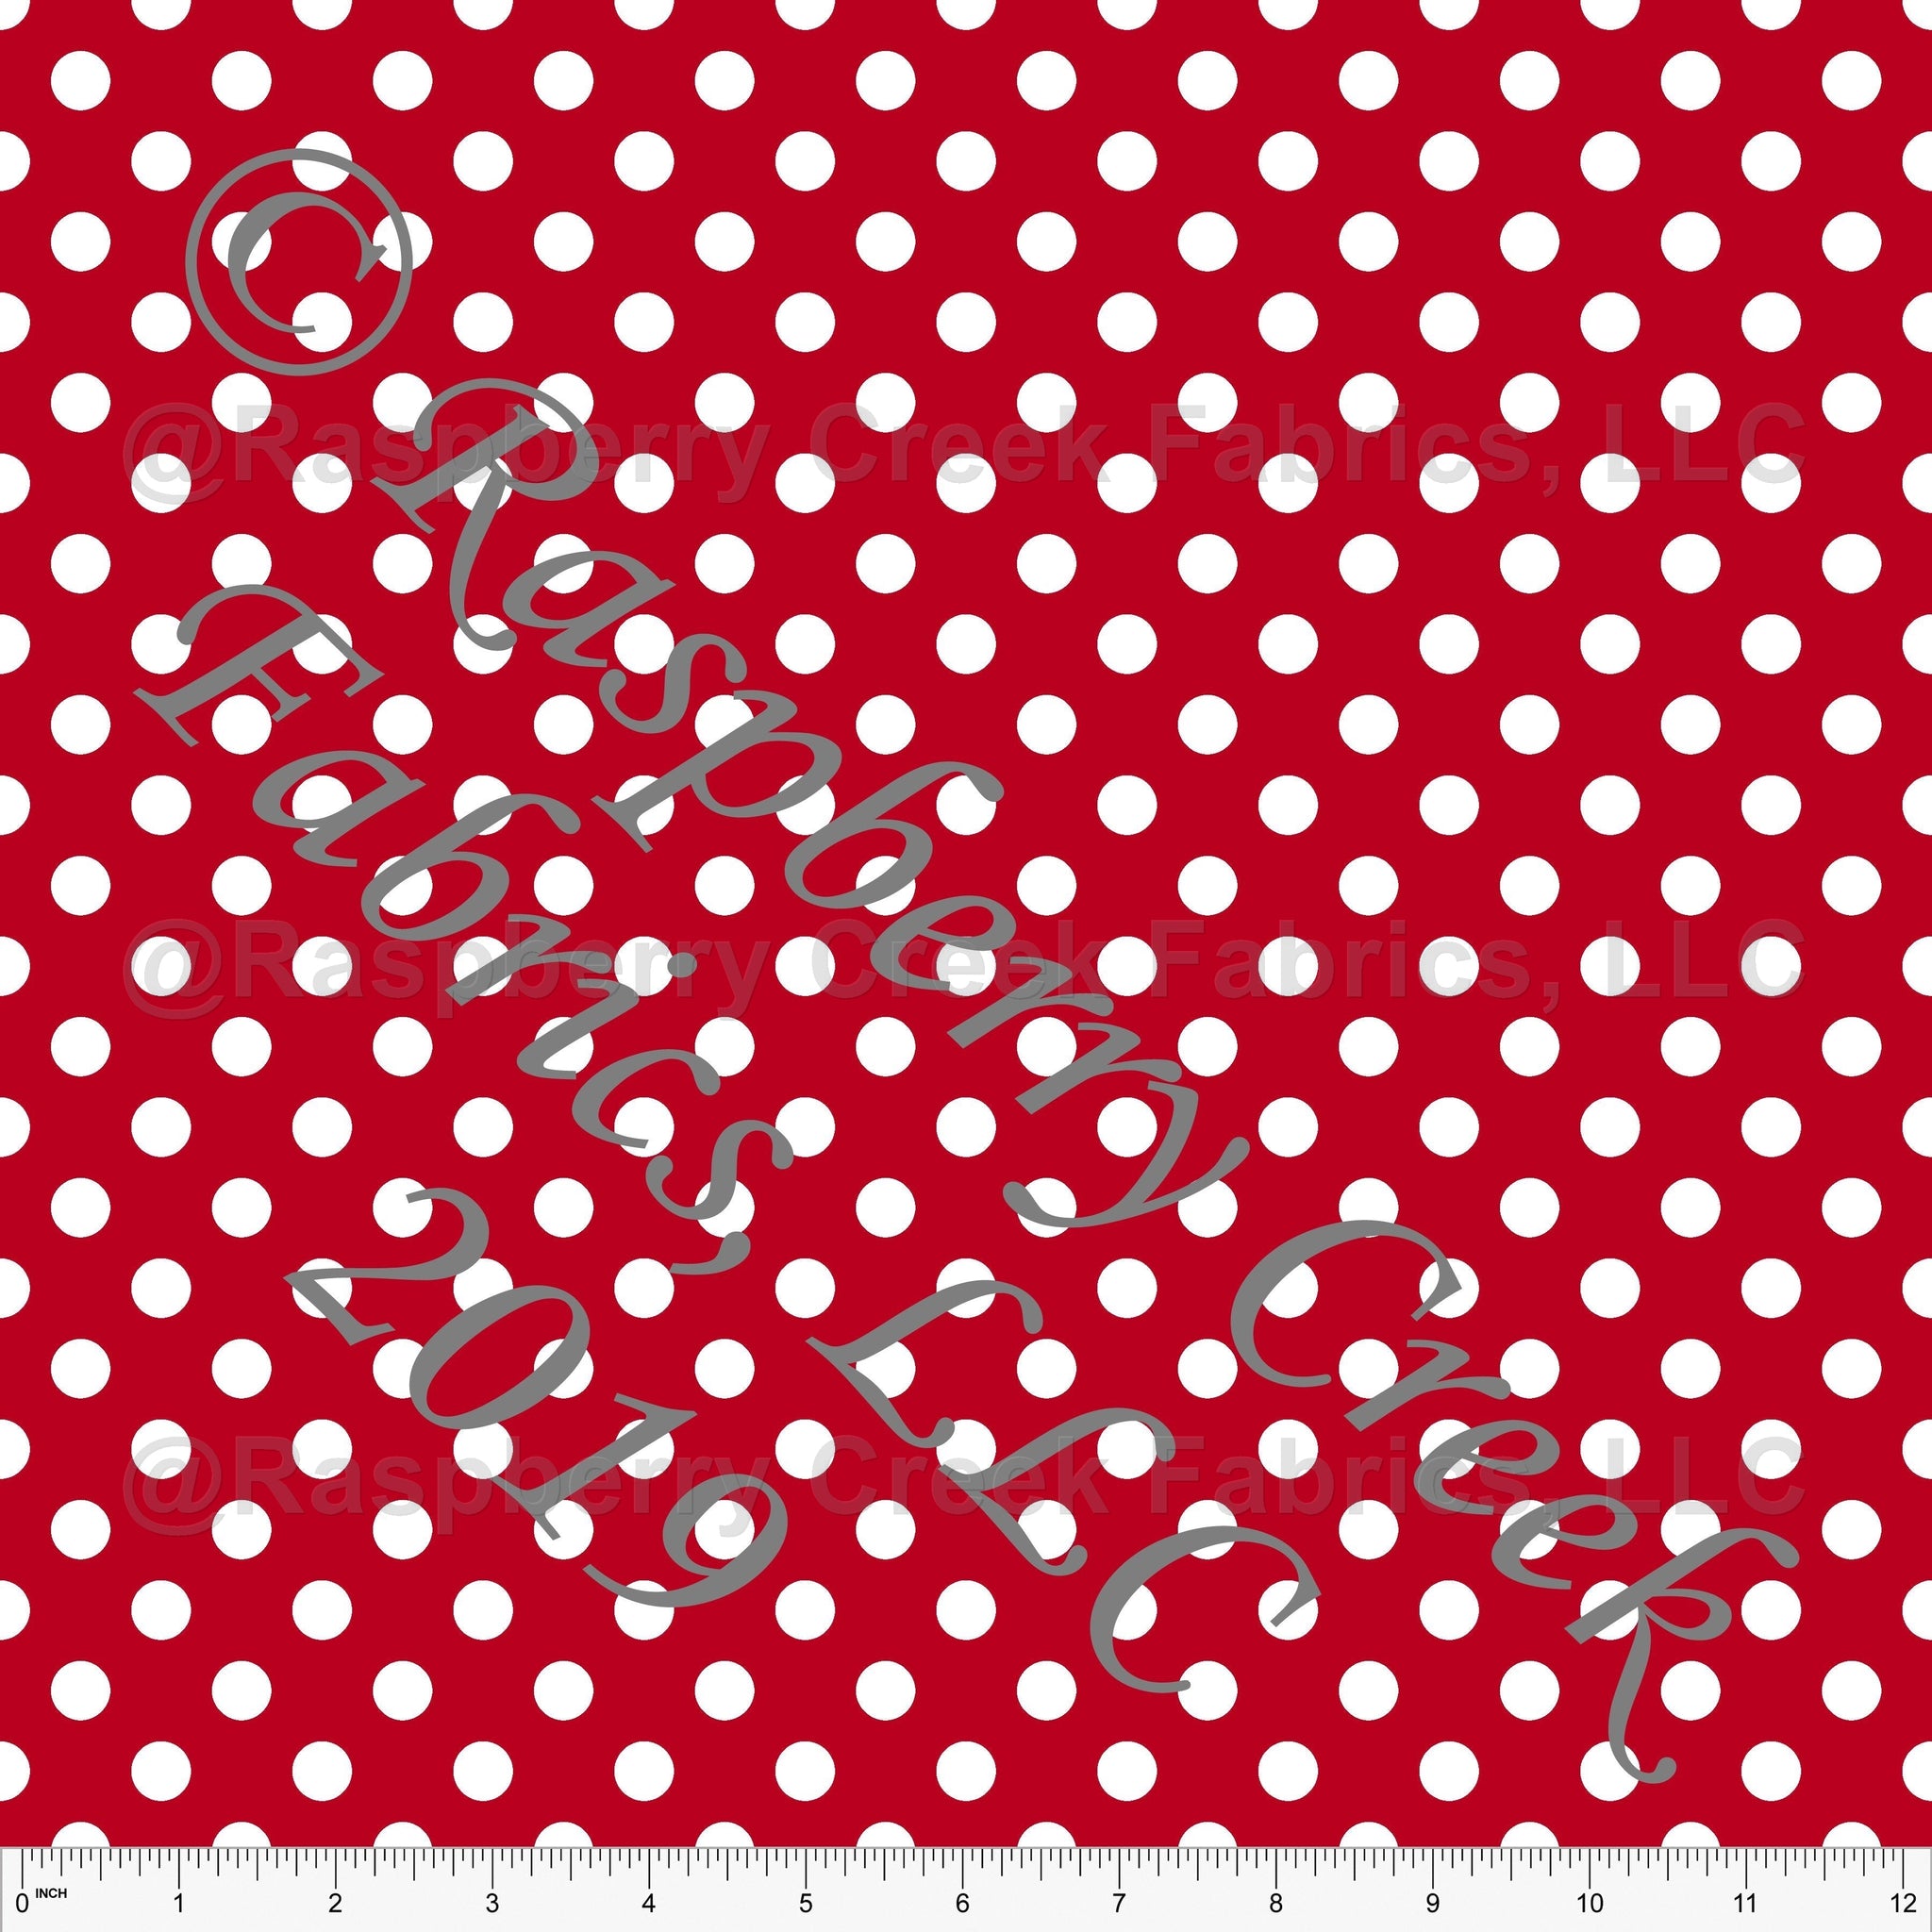 Red and White Polka Dot Print Fabric, Club Fabrics Fabric